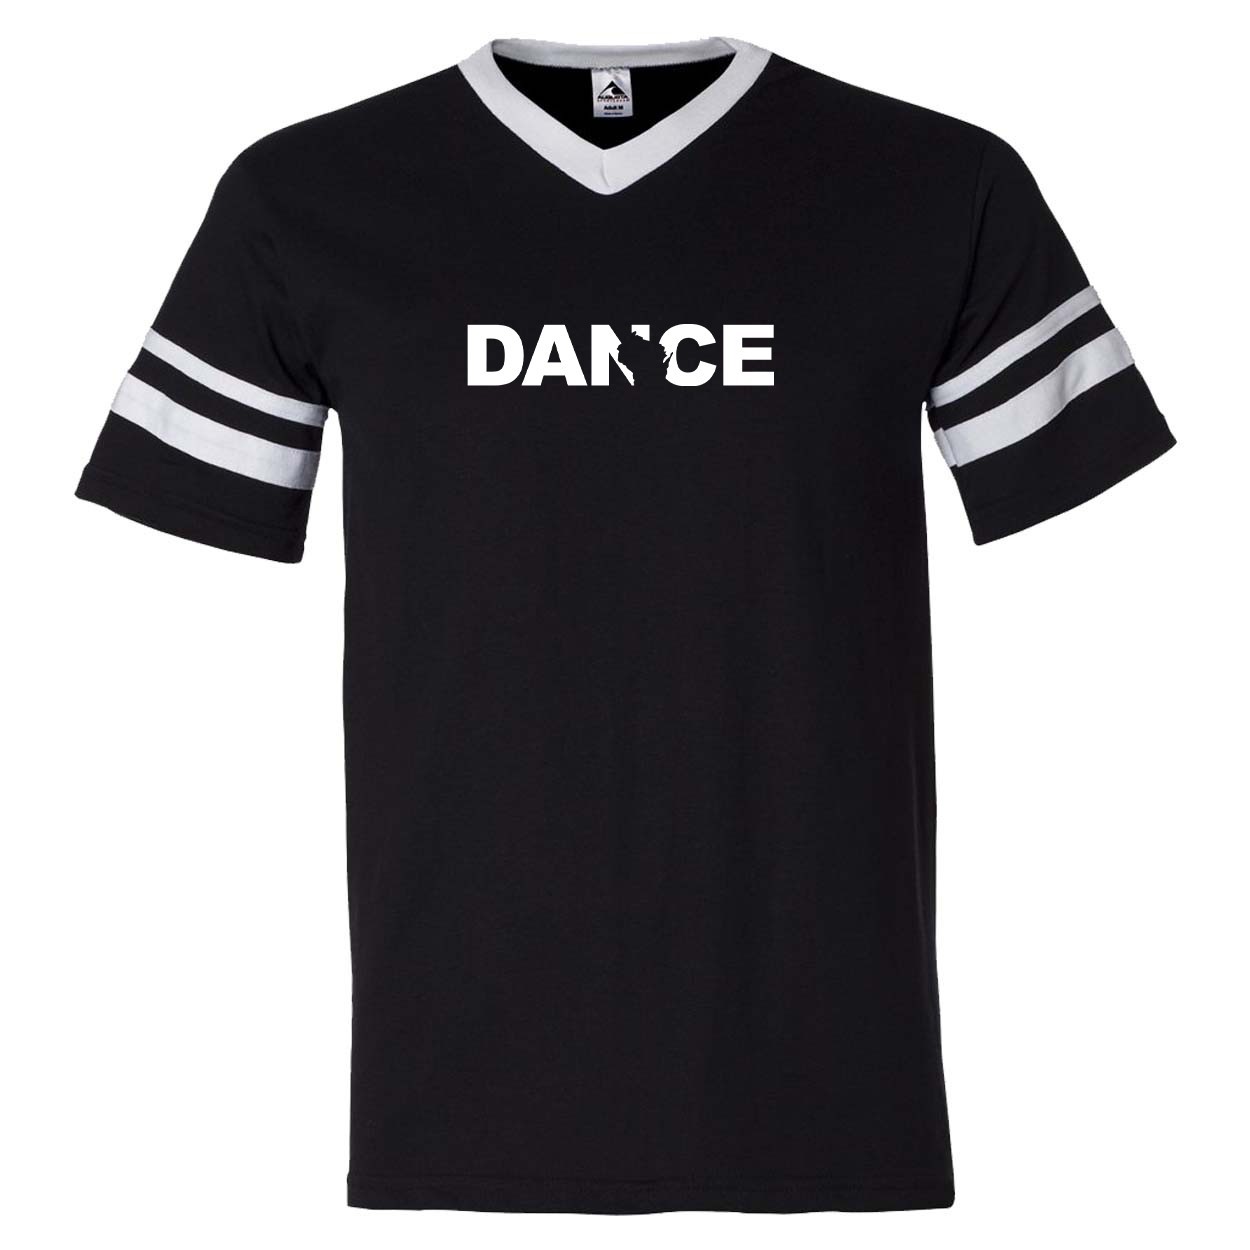 Dance Wisconsin Classic Premium Striped Jersey T-Shirt Black/White (White Logo)